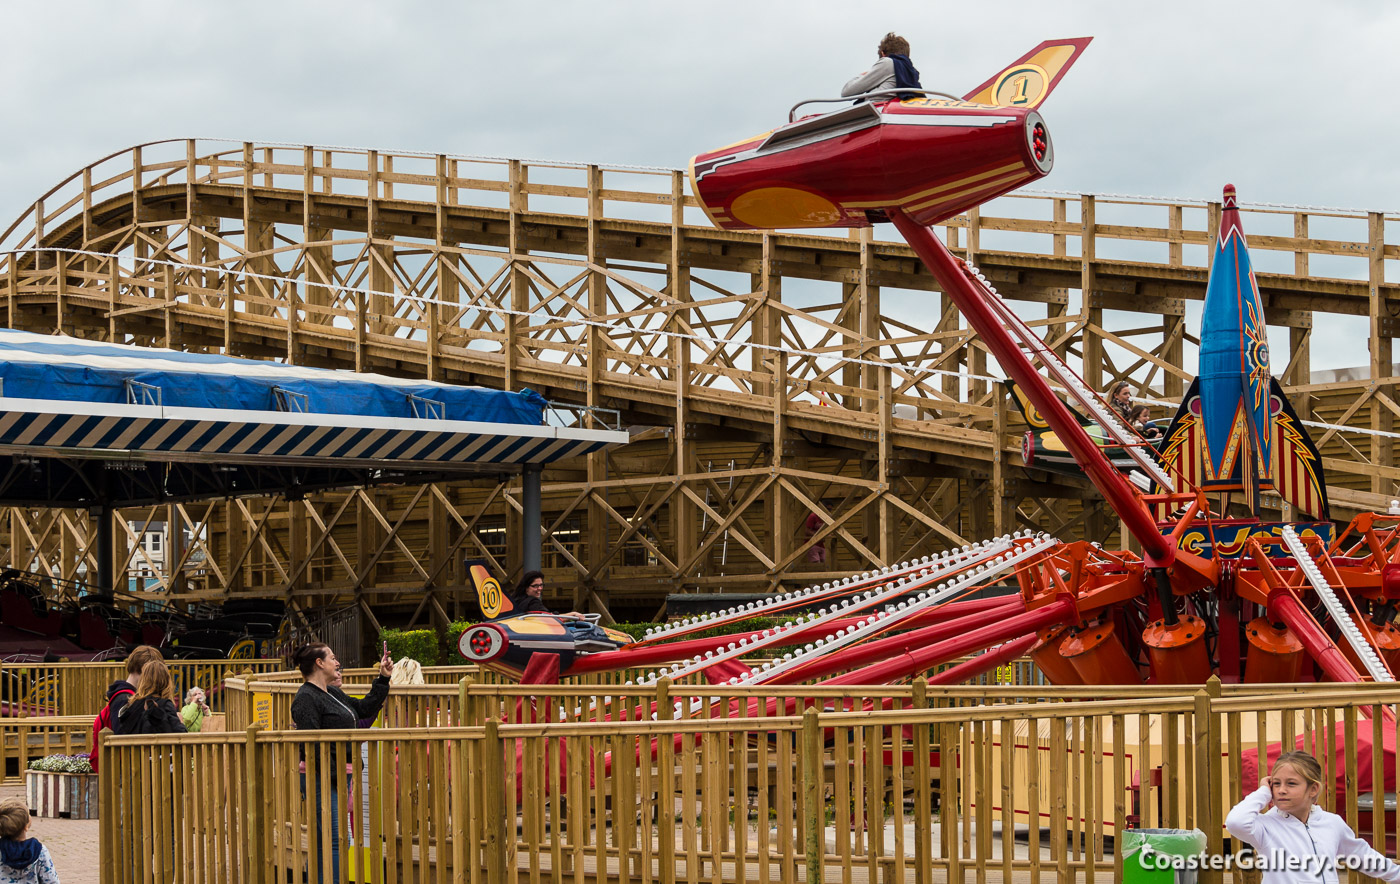 Retro paintjob on thrill rides at Dreamland amusement park in England